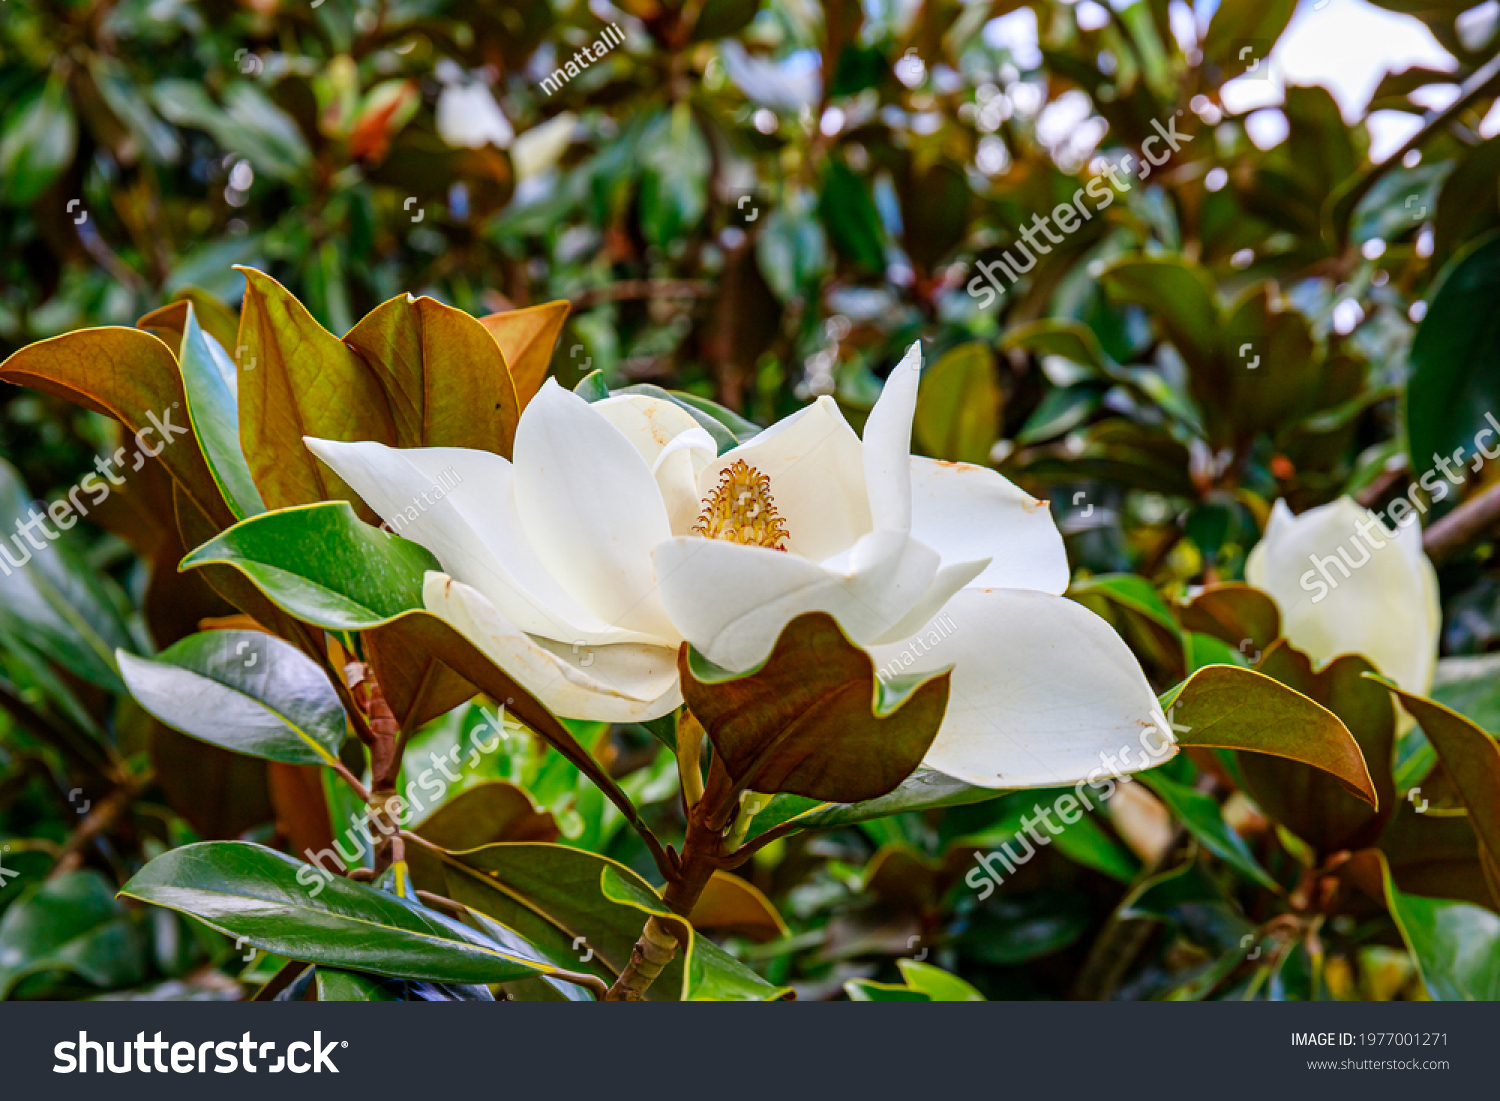 Southern magnolia grandiflora flower, close up. Evergreen Galissoniere  Bull Bay magnolia, laurel  Loblolly magnolia bloom in tree. Big flower in summer garden #1977001271